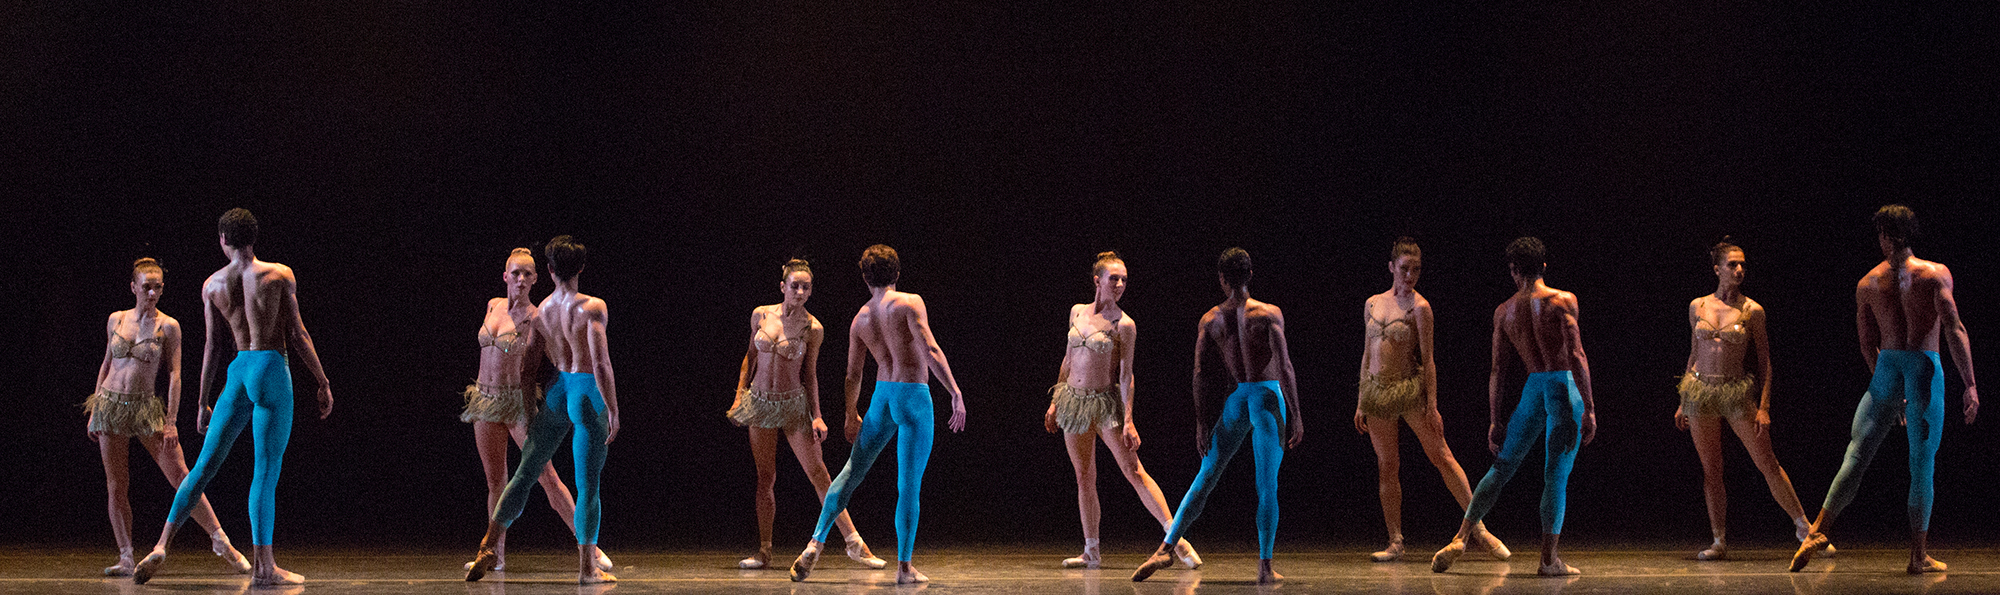 Ballet Arizona dancers in Ib Andersen's "Rio." Photograph by Alexander Iziliaev.